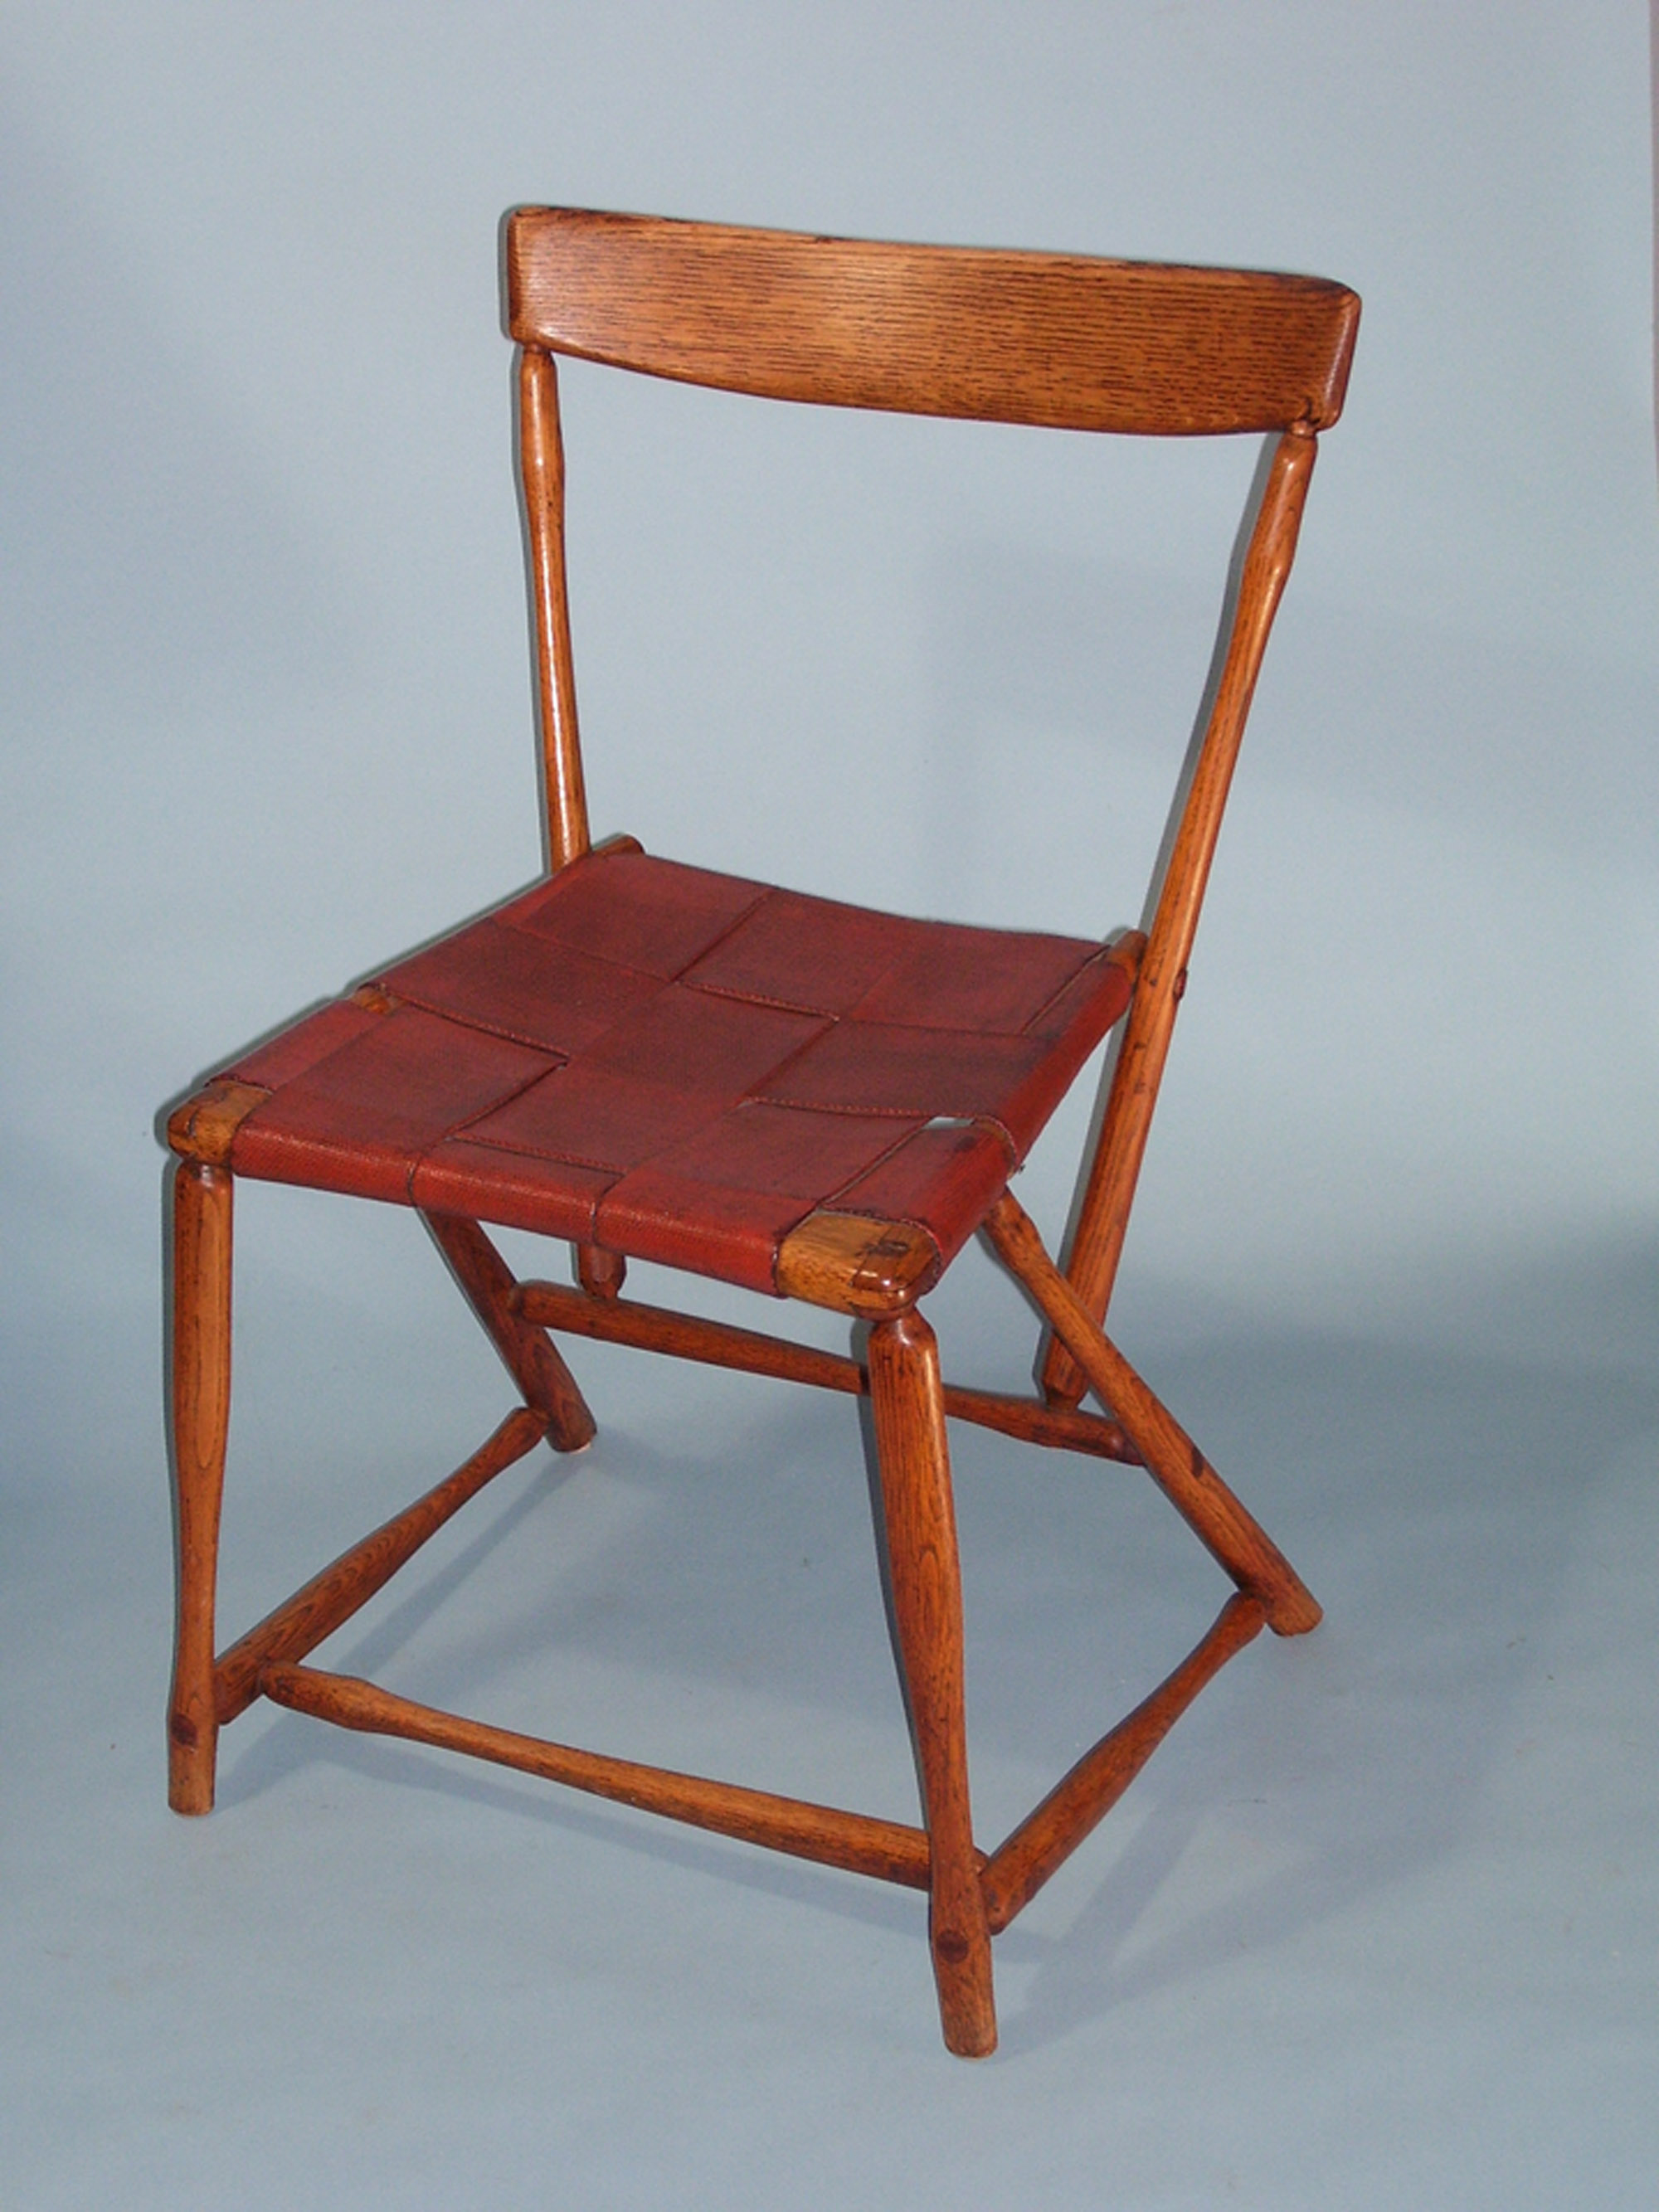 Wharton Esherick's "Hammer Handle Chair"